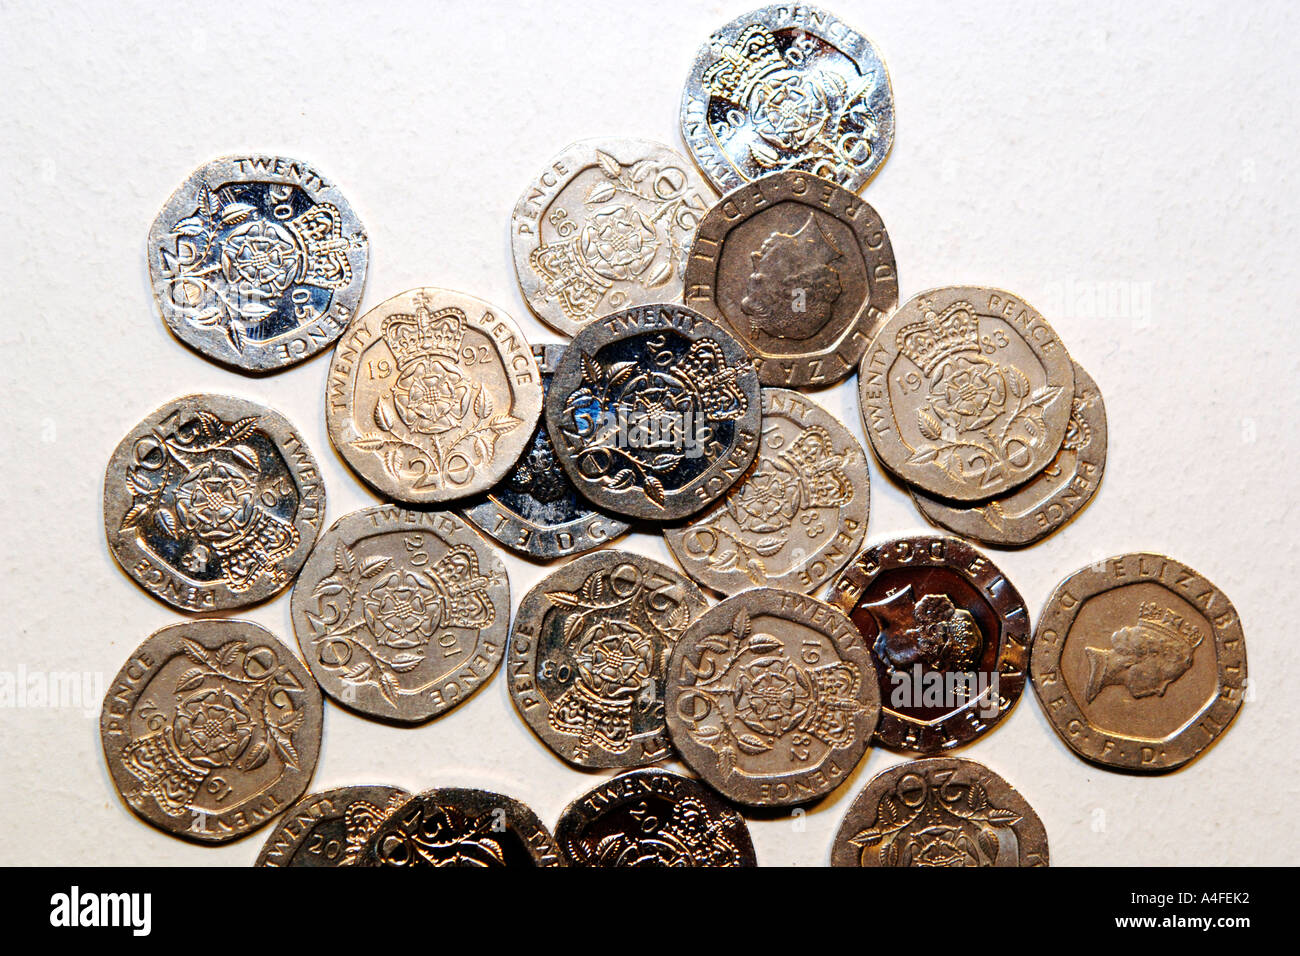 English 20p coins. Stock Photo